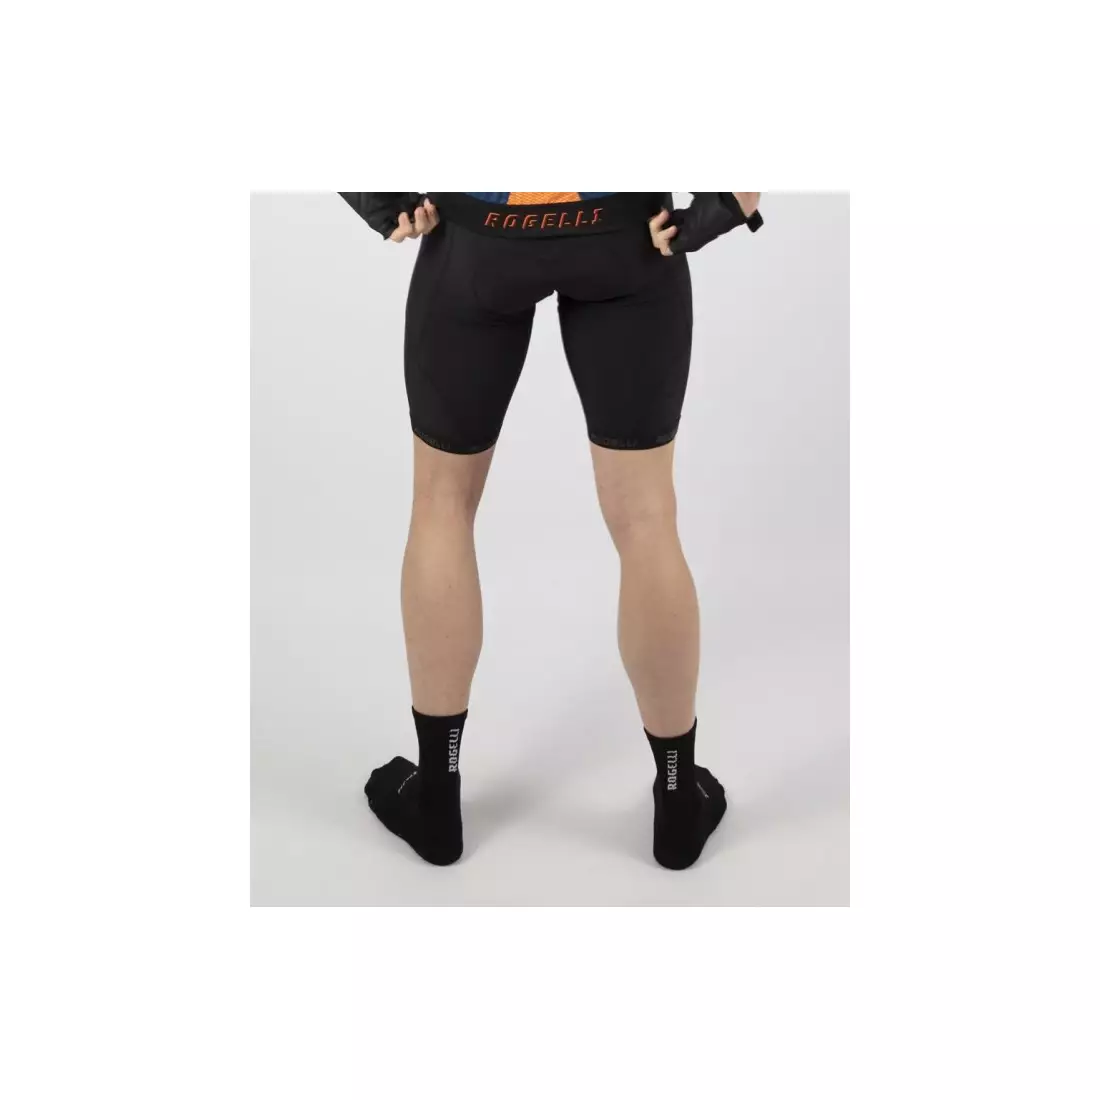 ROGELLI Basic De Lux EVO short bike shorts without braces black 002.600